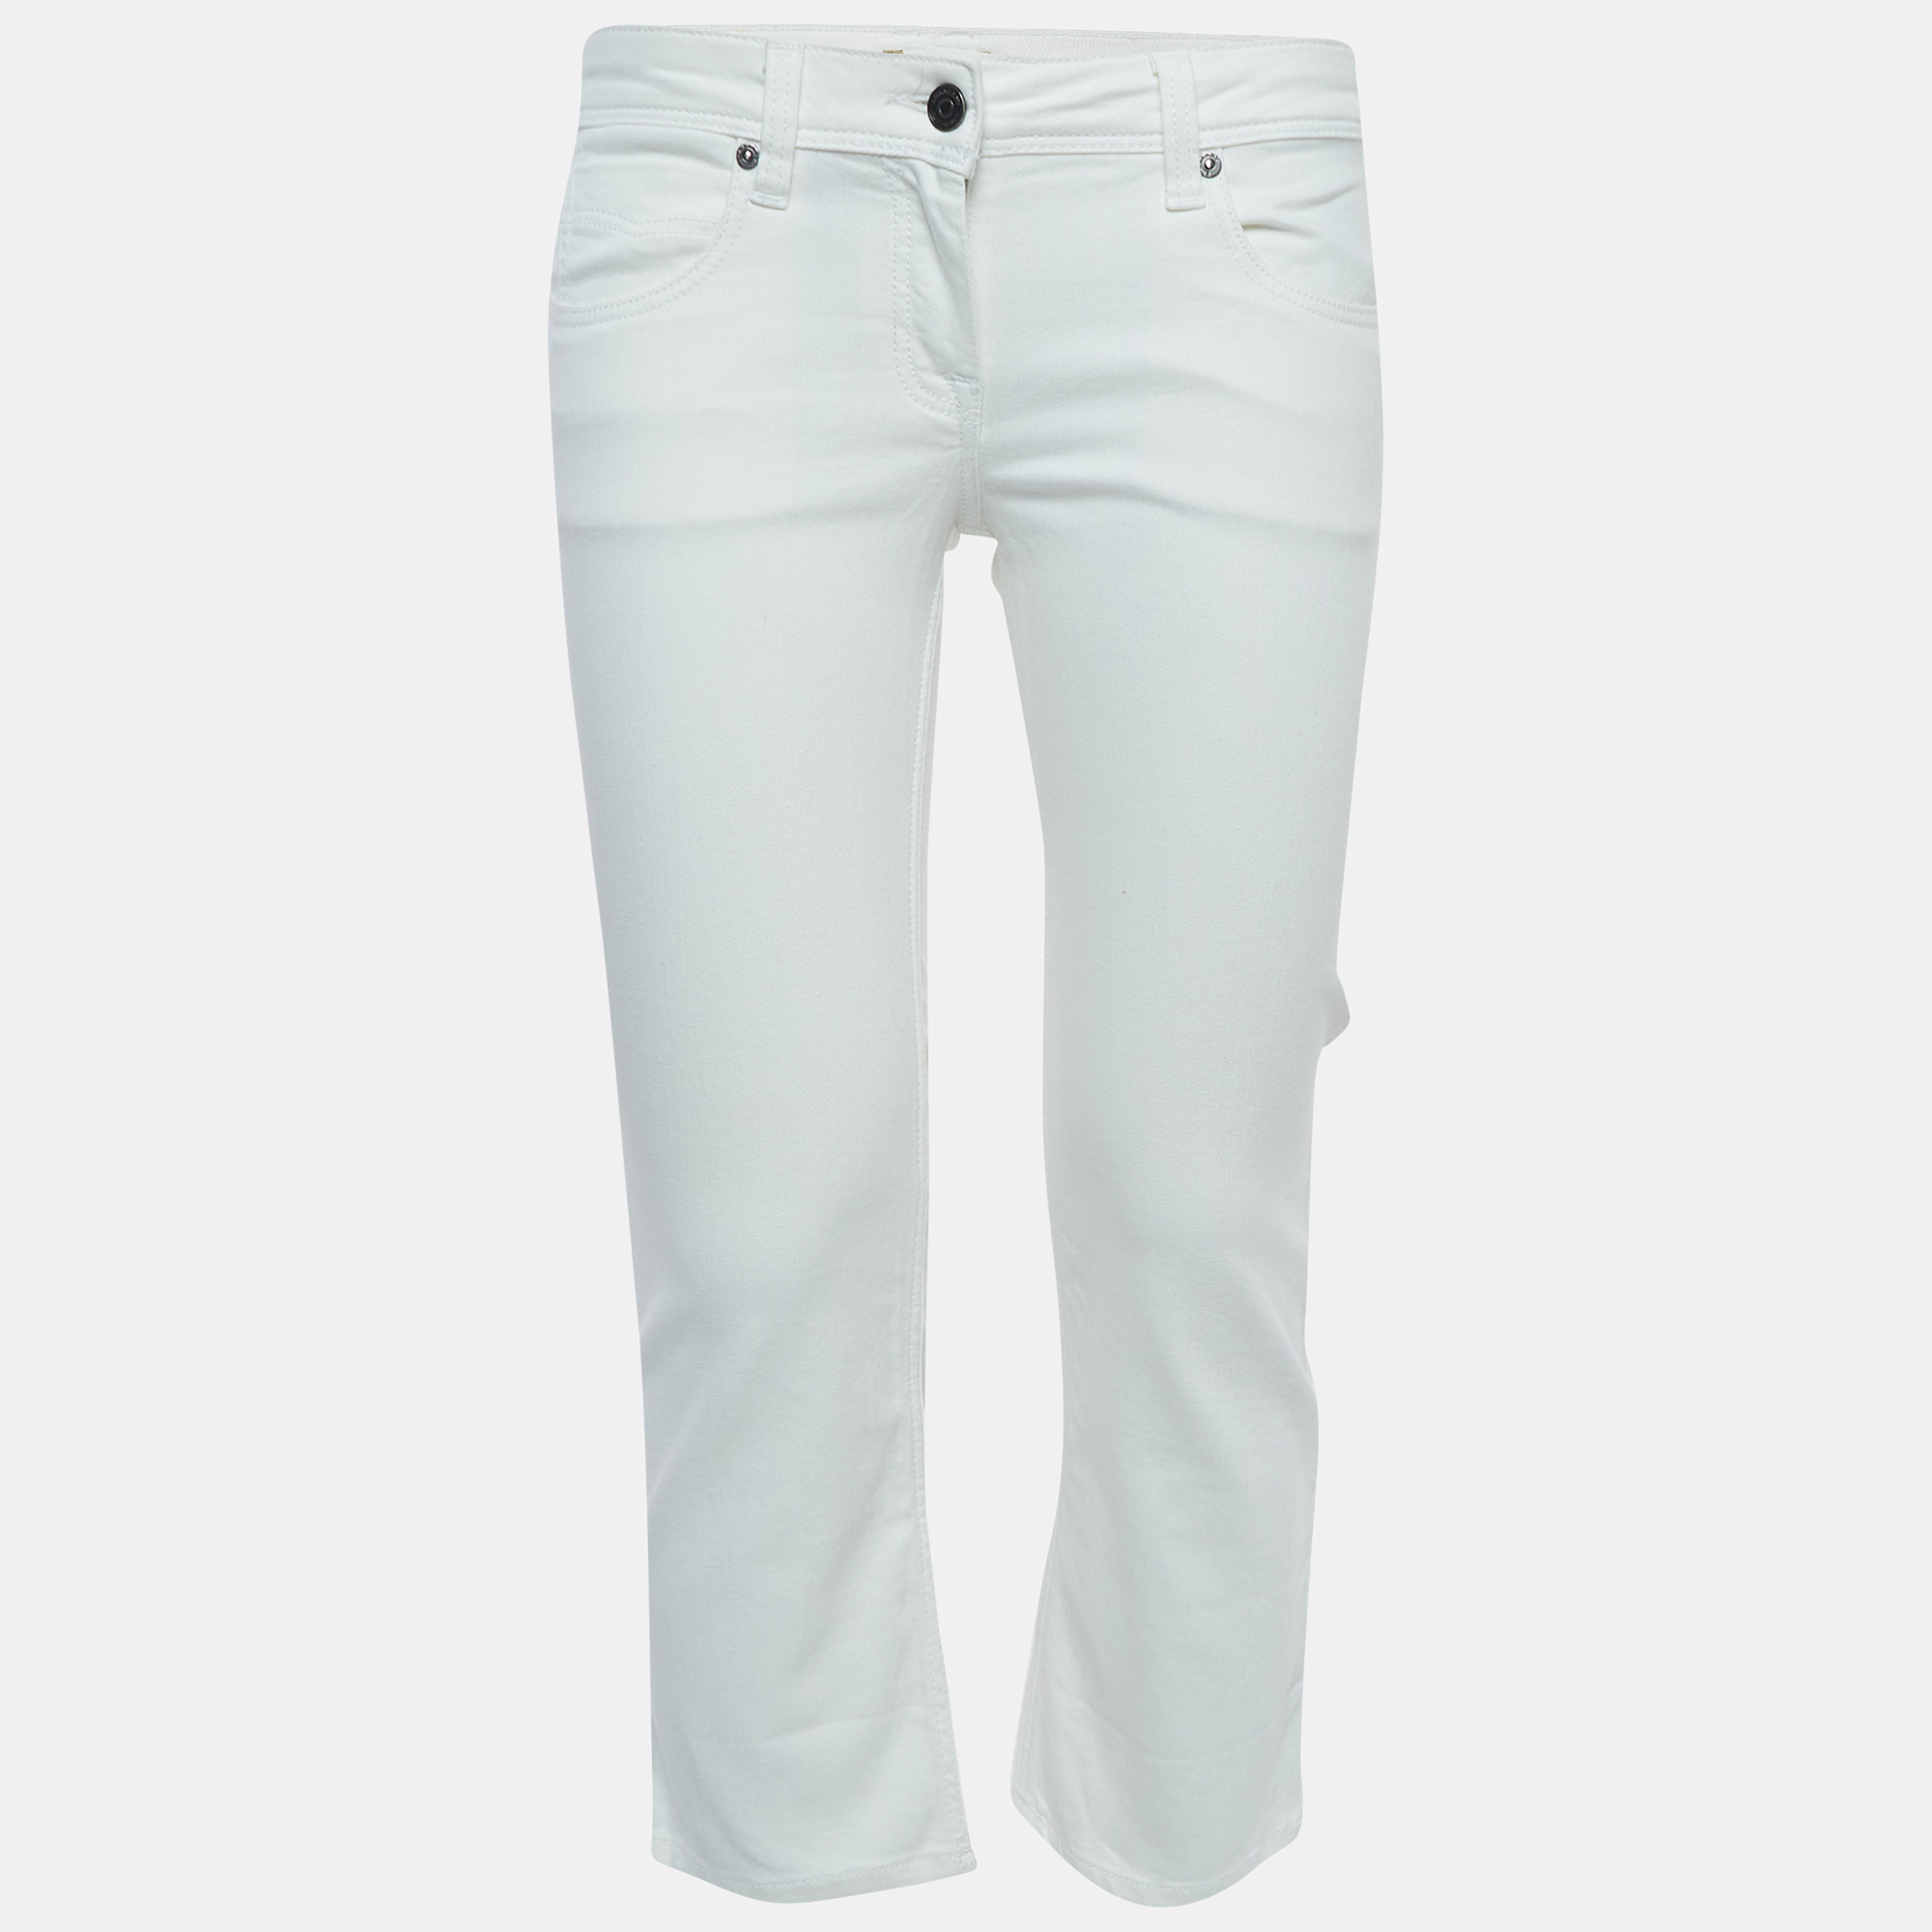 Burberry brit white denim skinny leg jeans s waist 27"